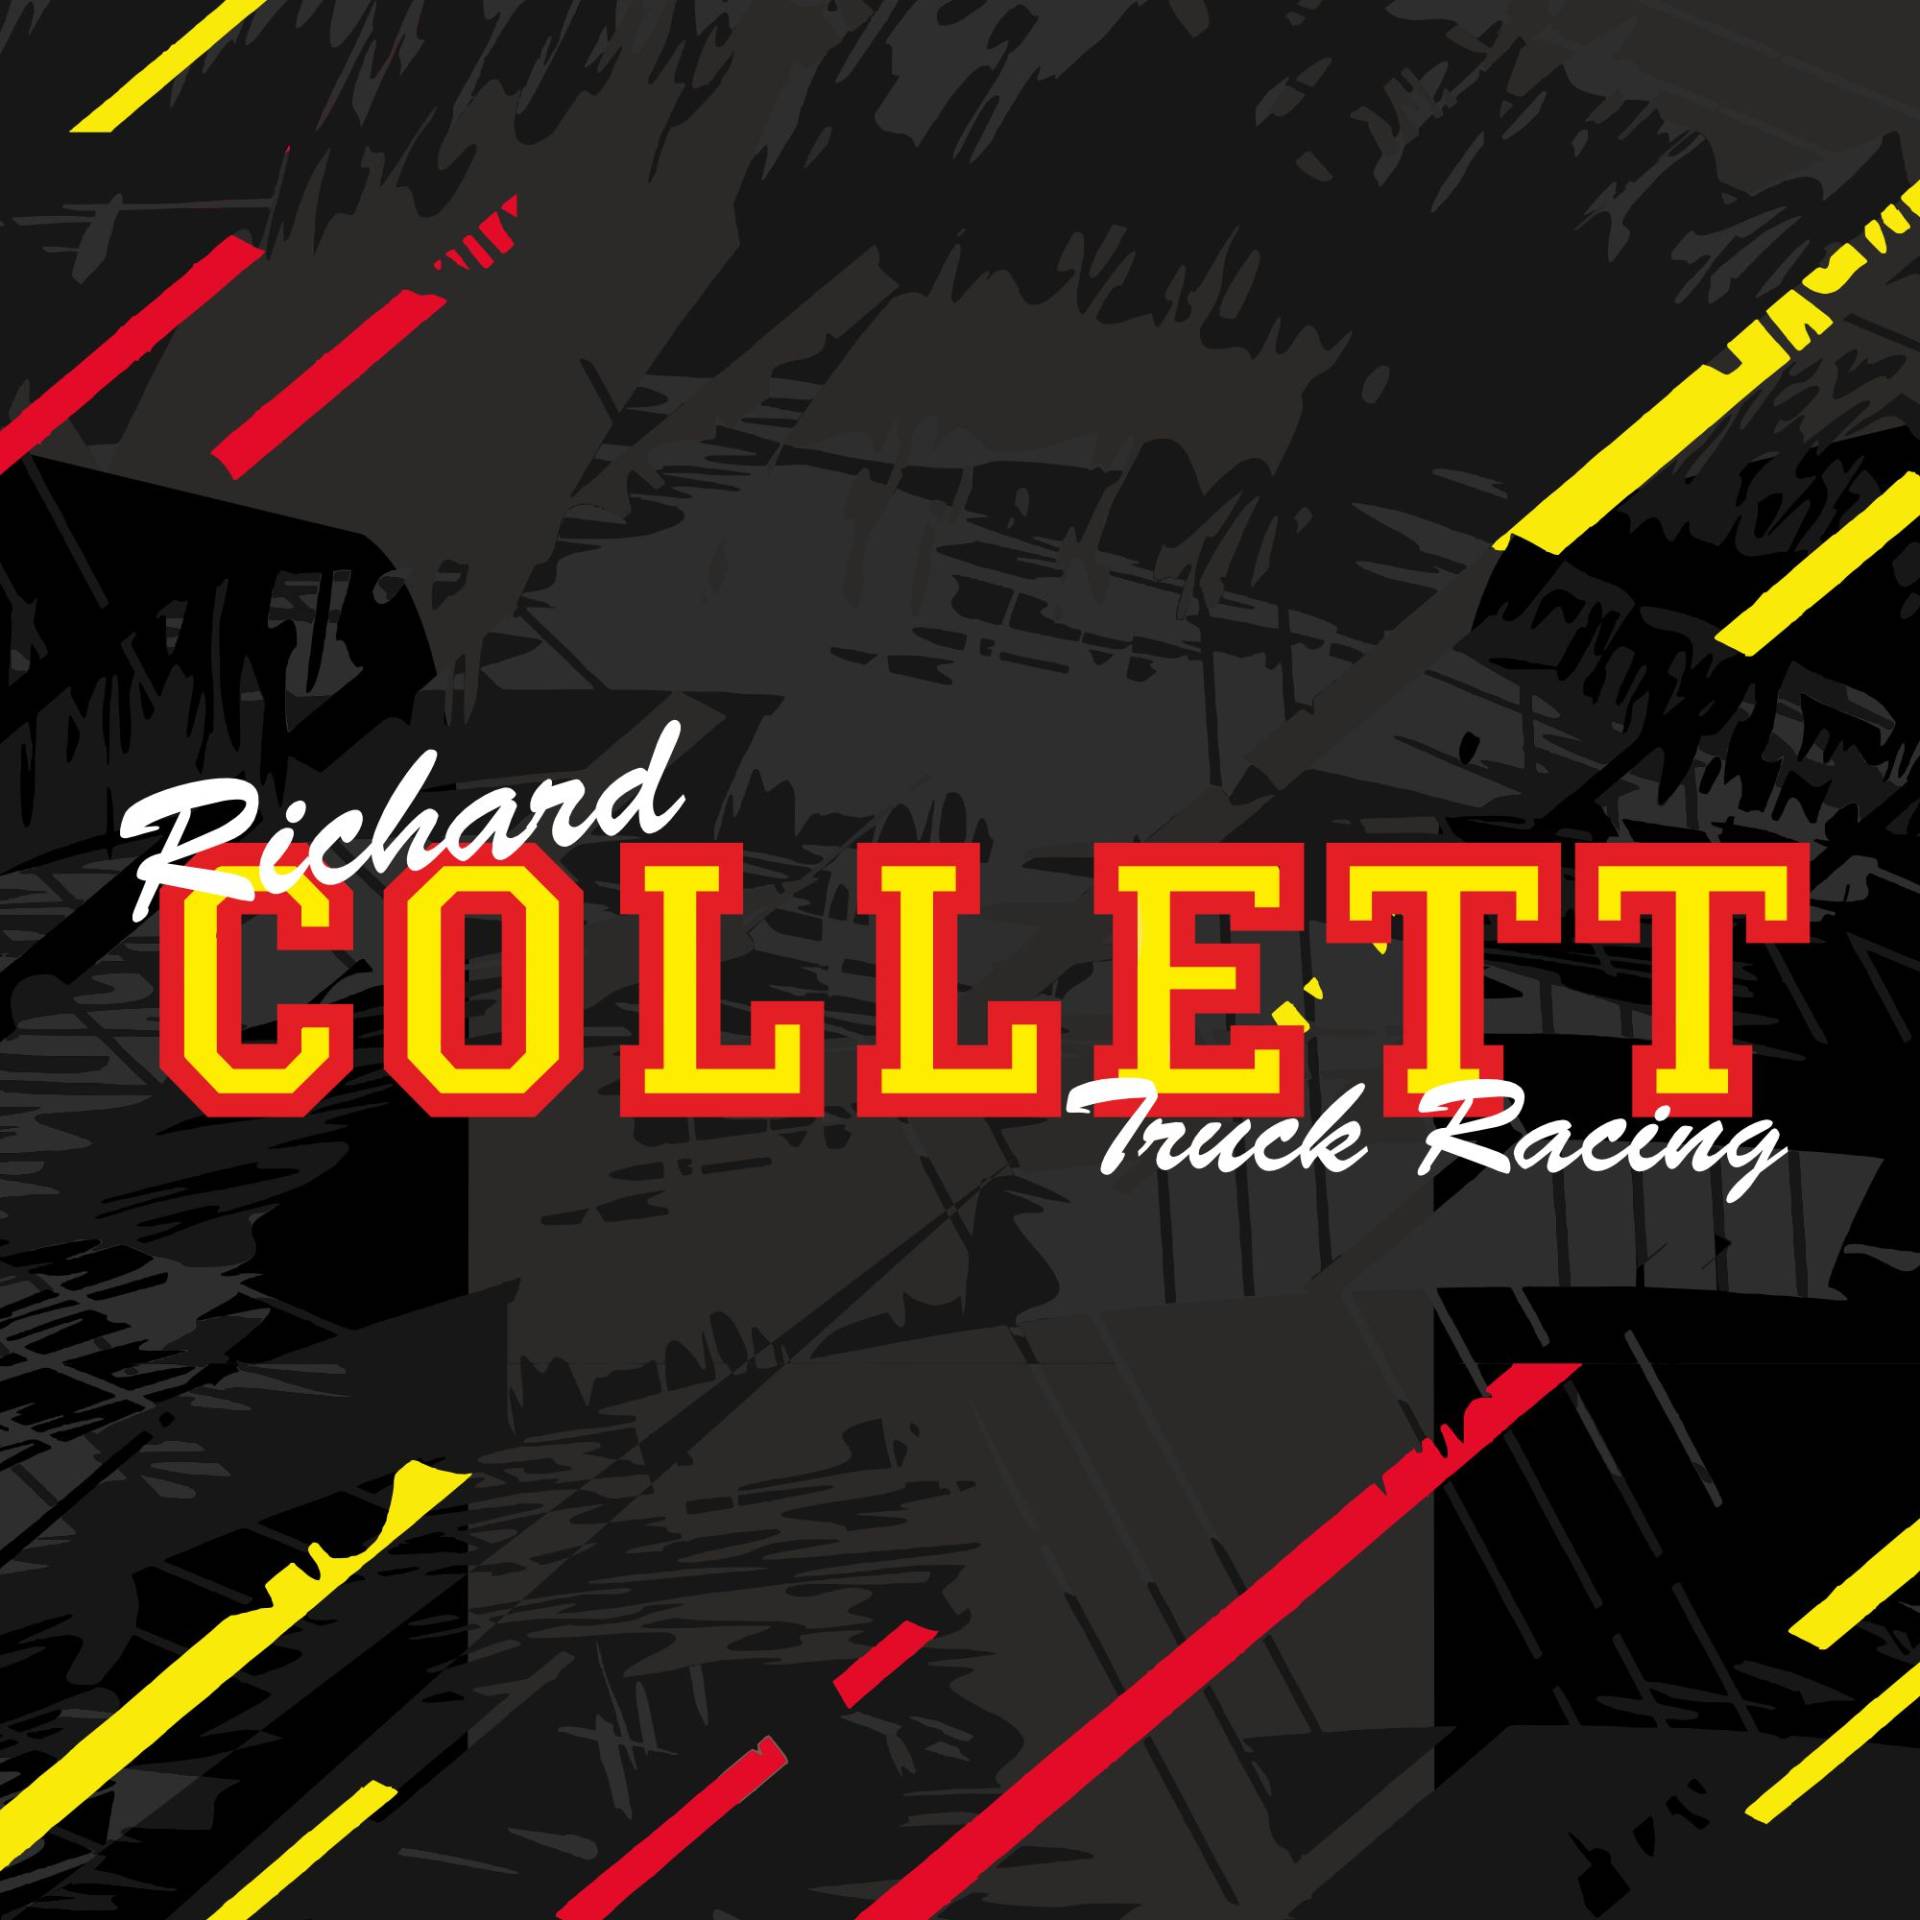 Richard Collett Truck Racing